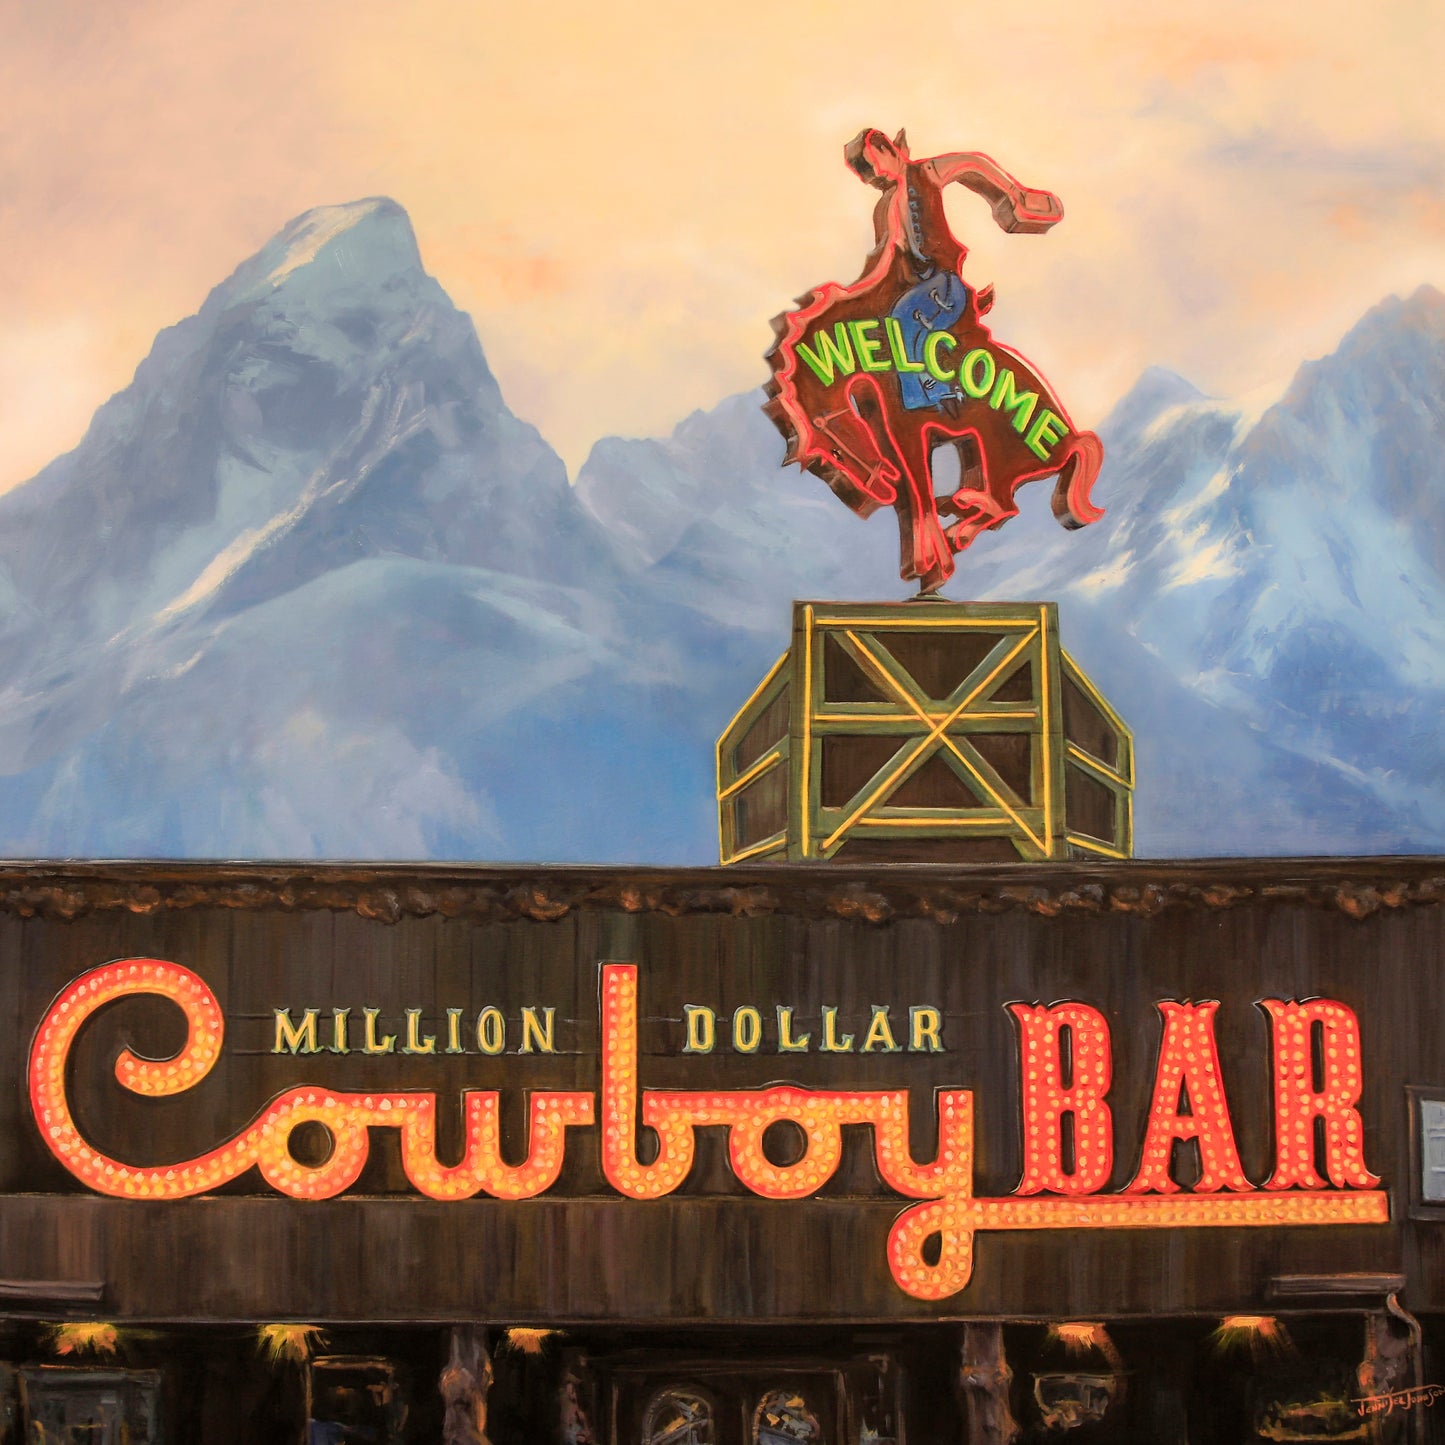 Teton Cowboy Bar